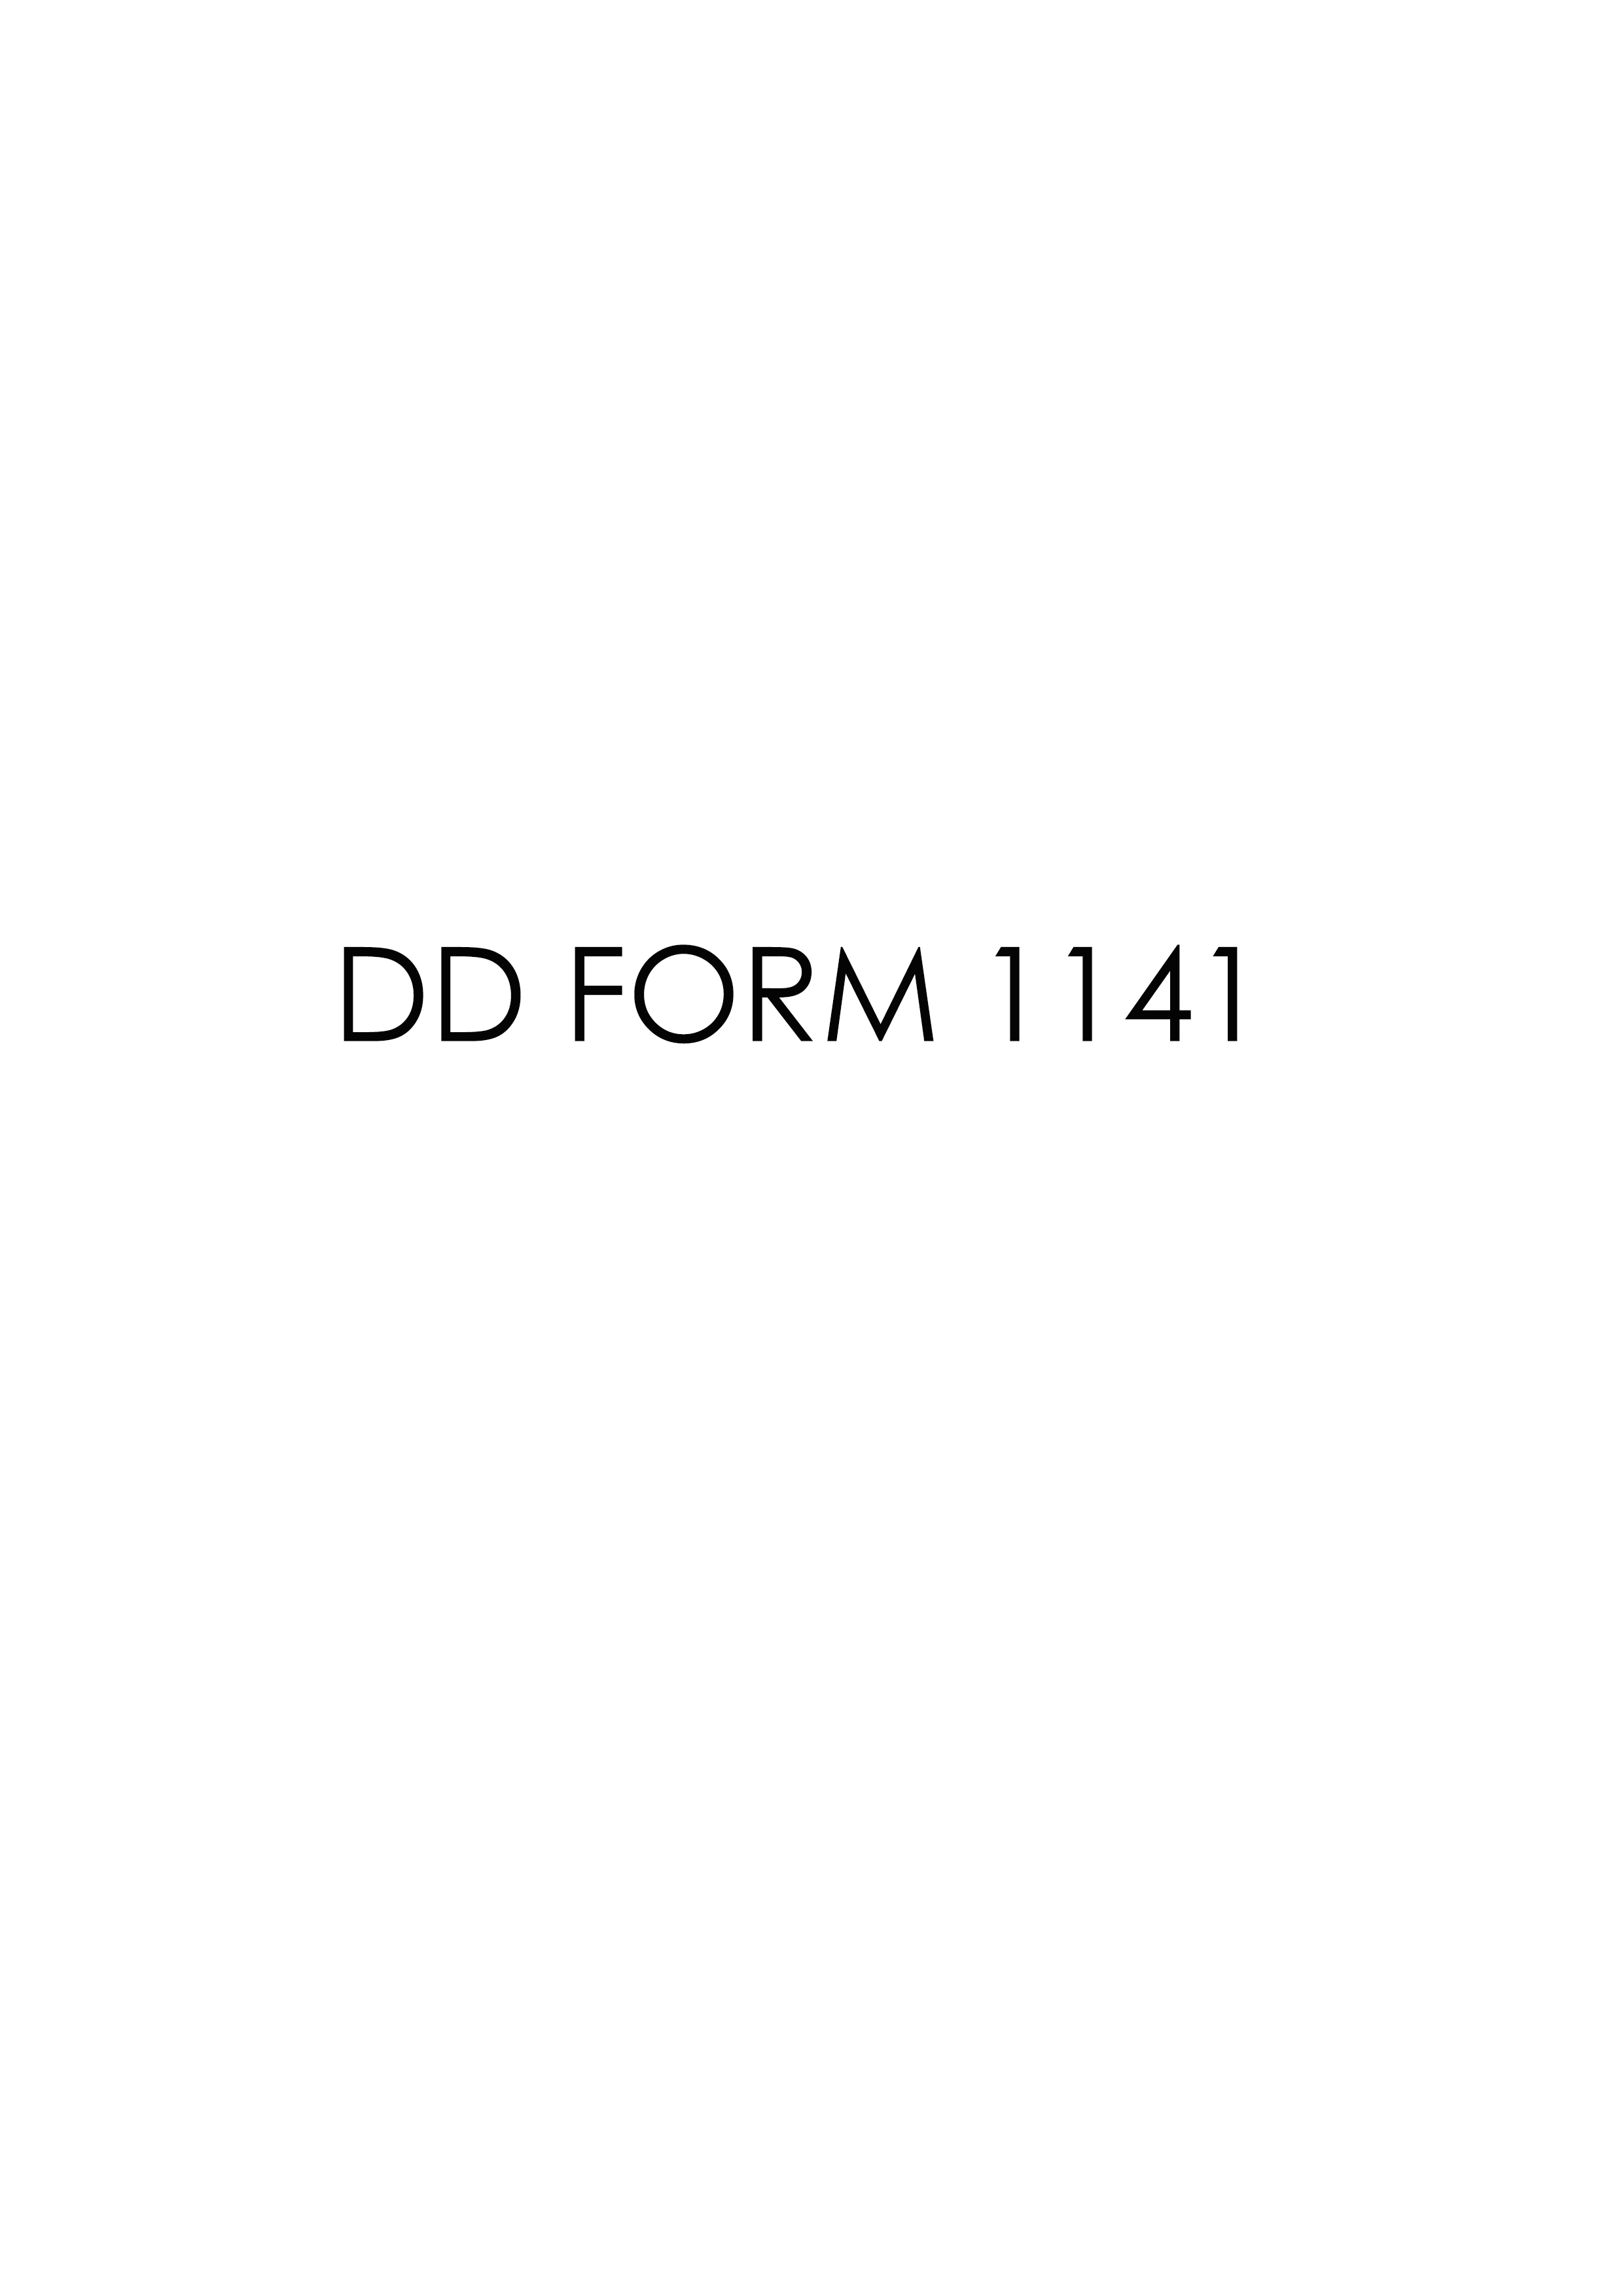 Download dd Form 1141